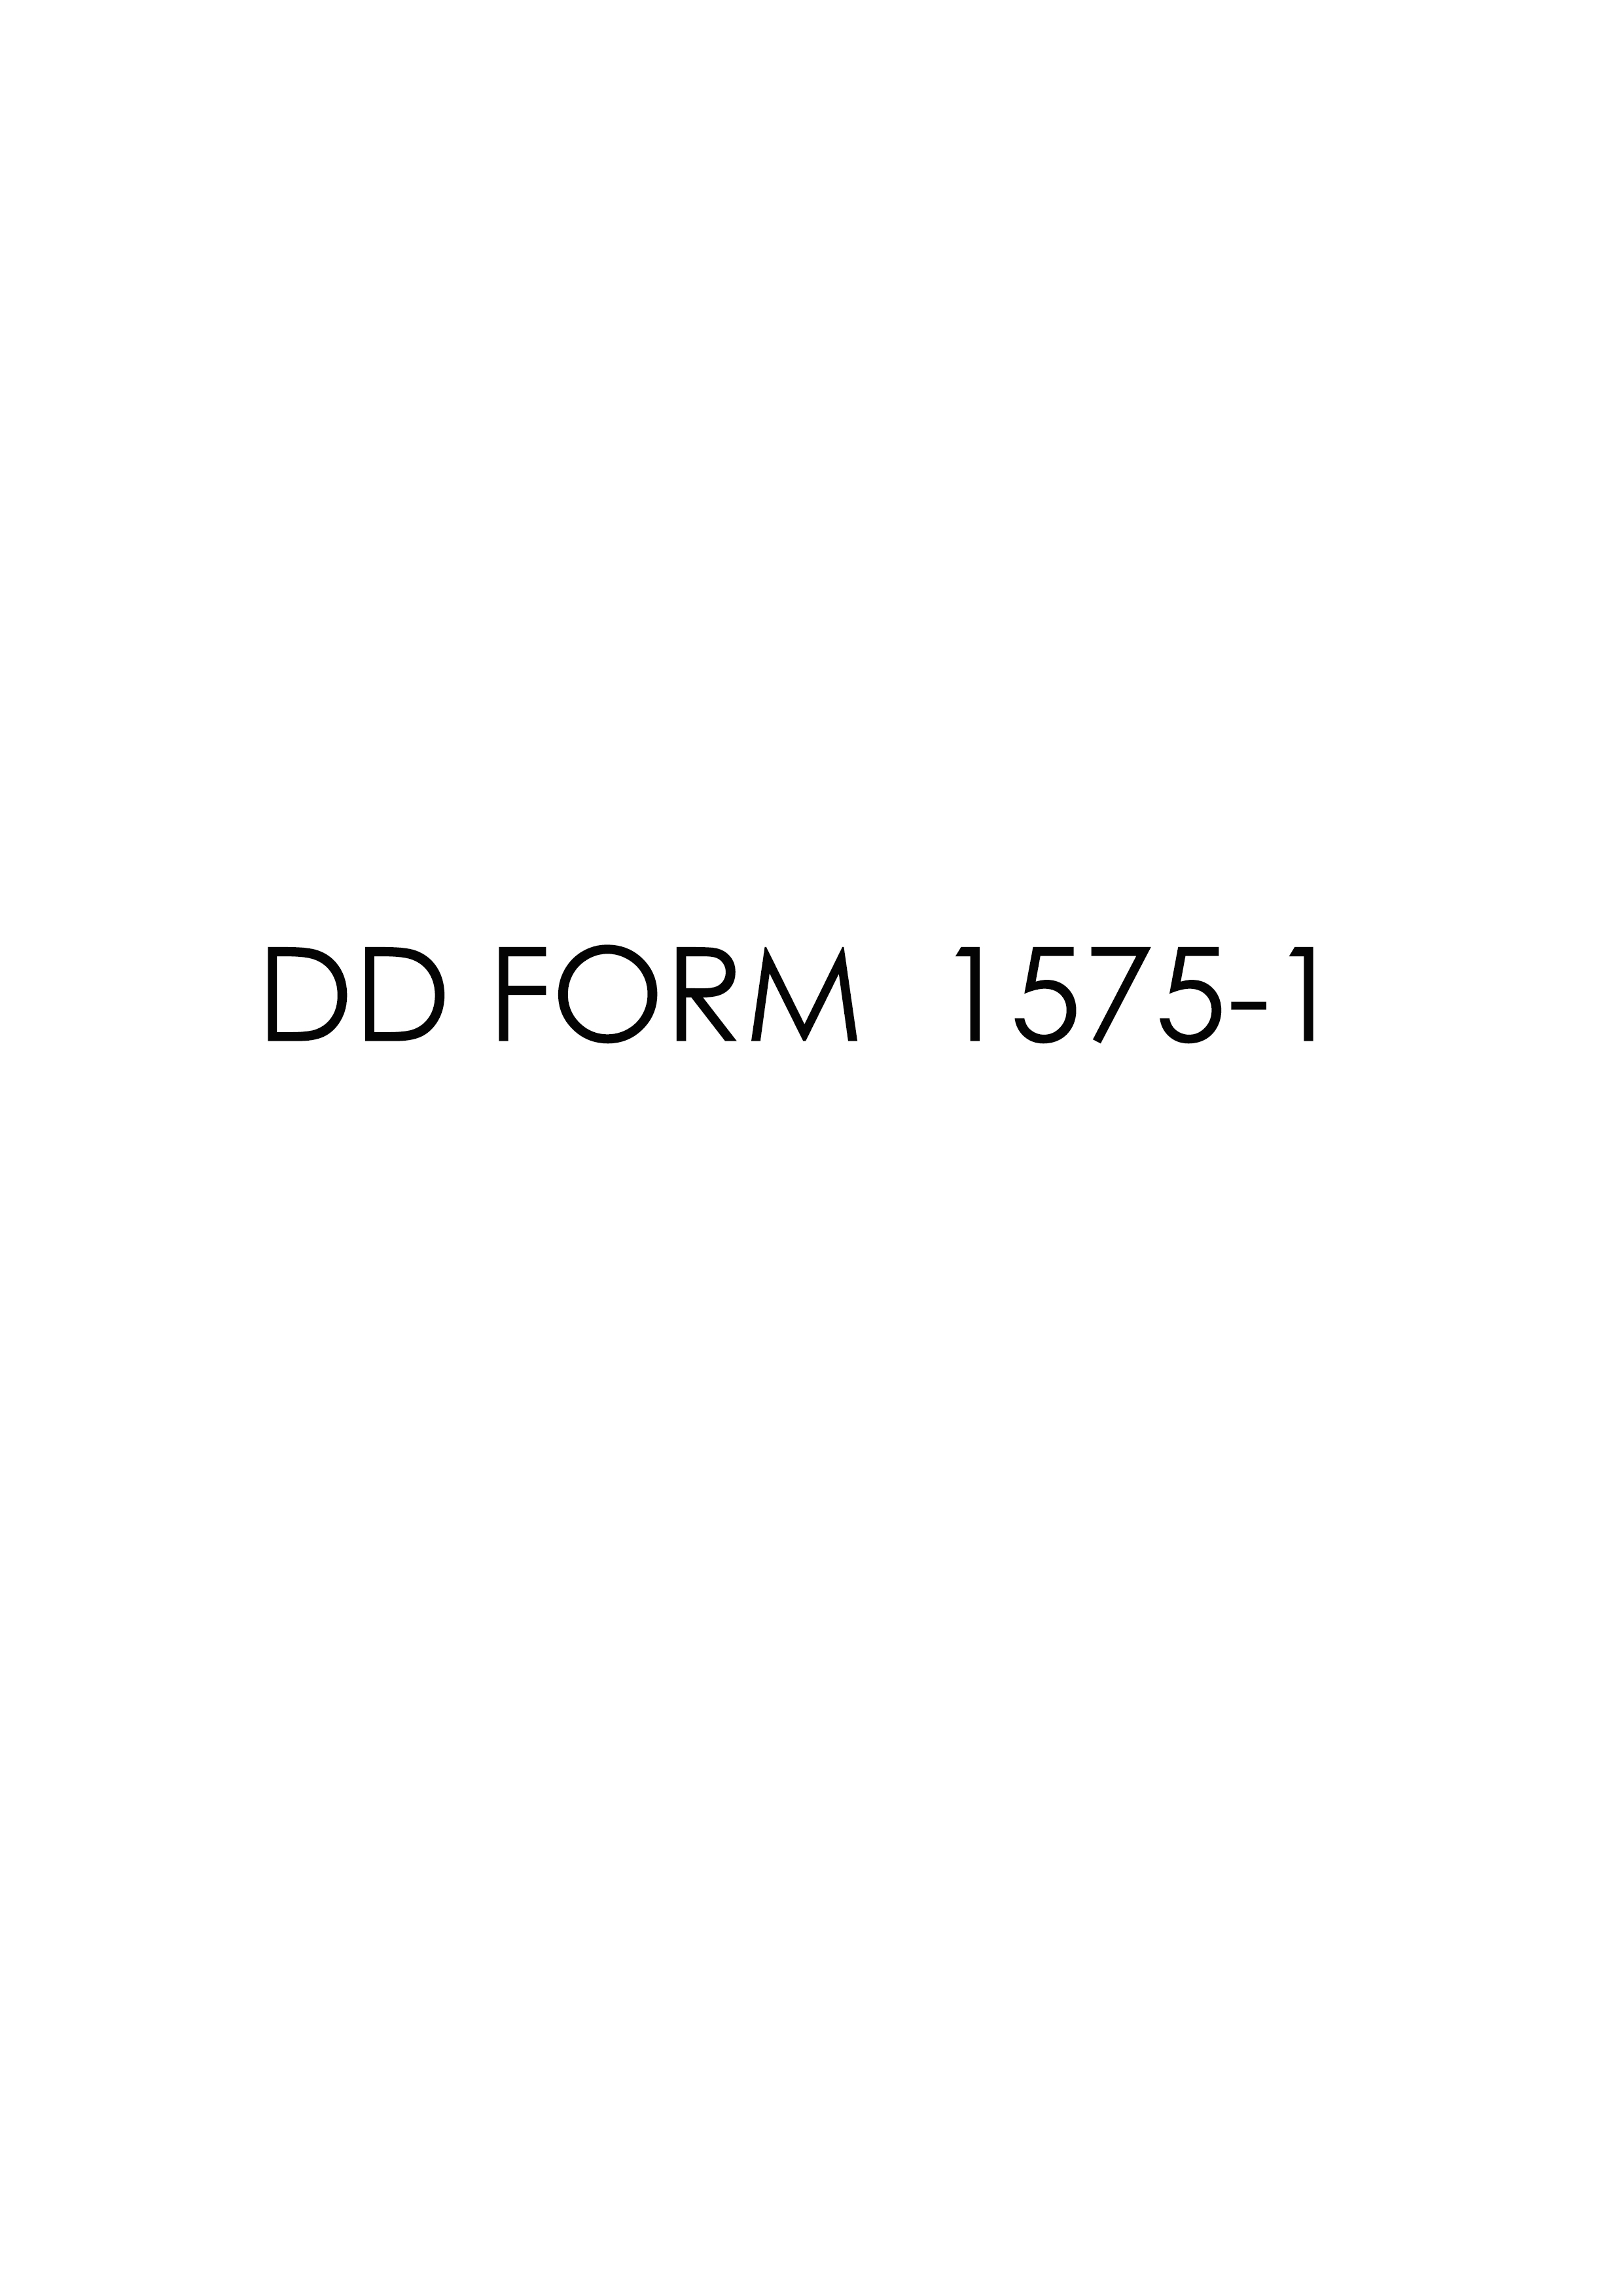 Download dd 1575-1 Form